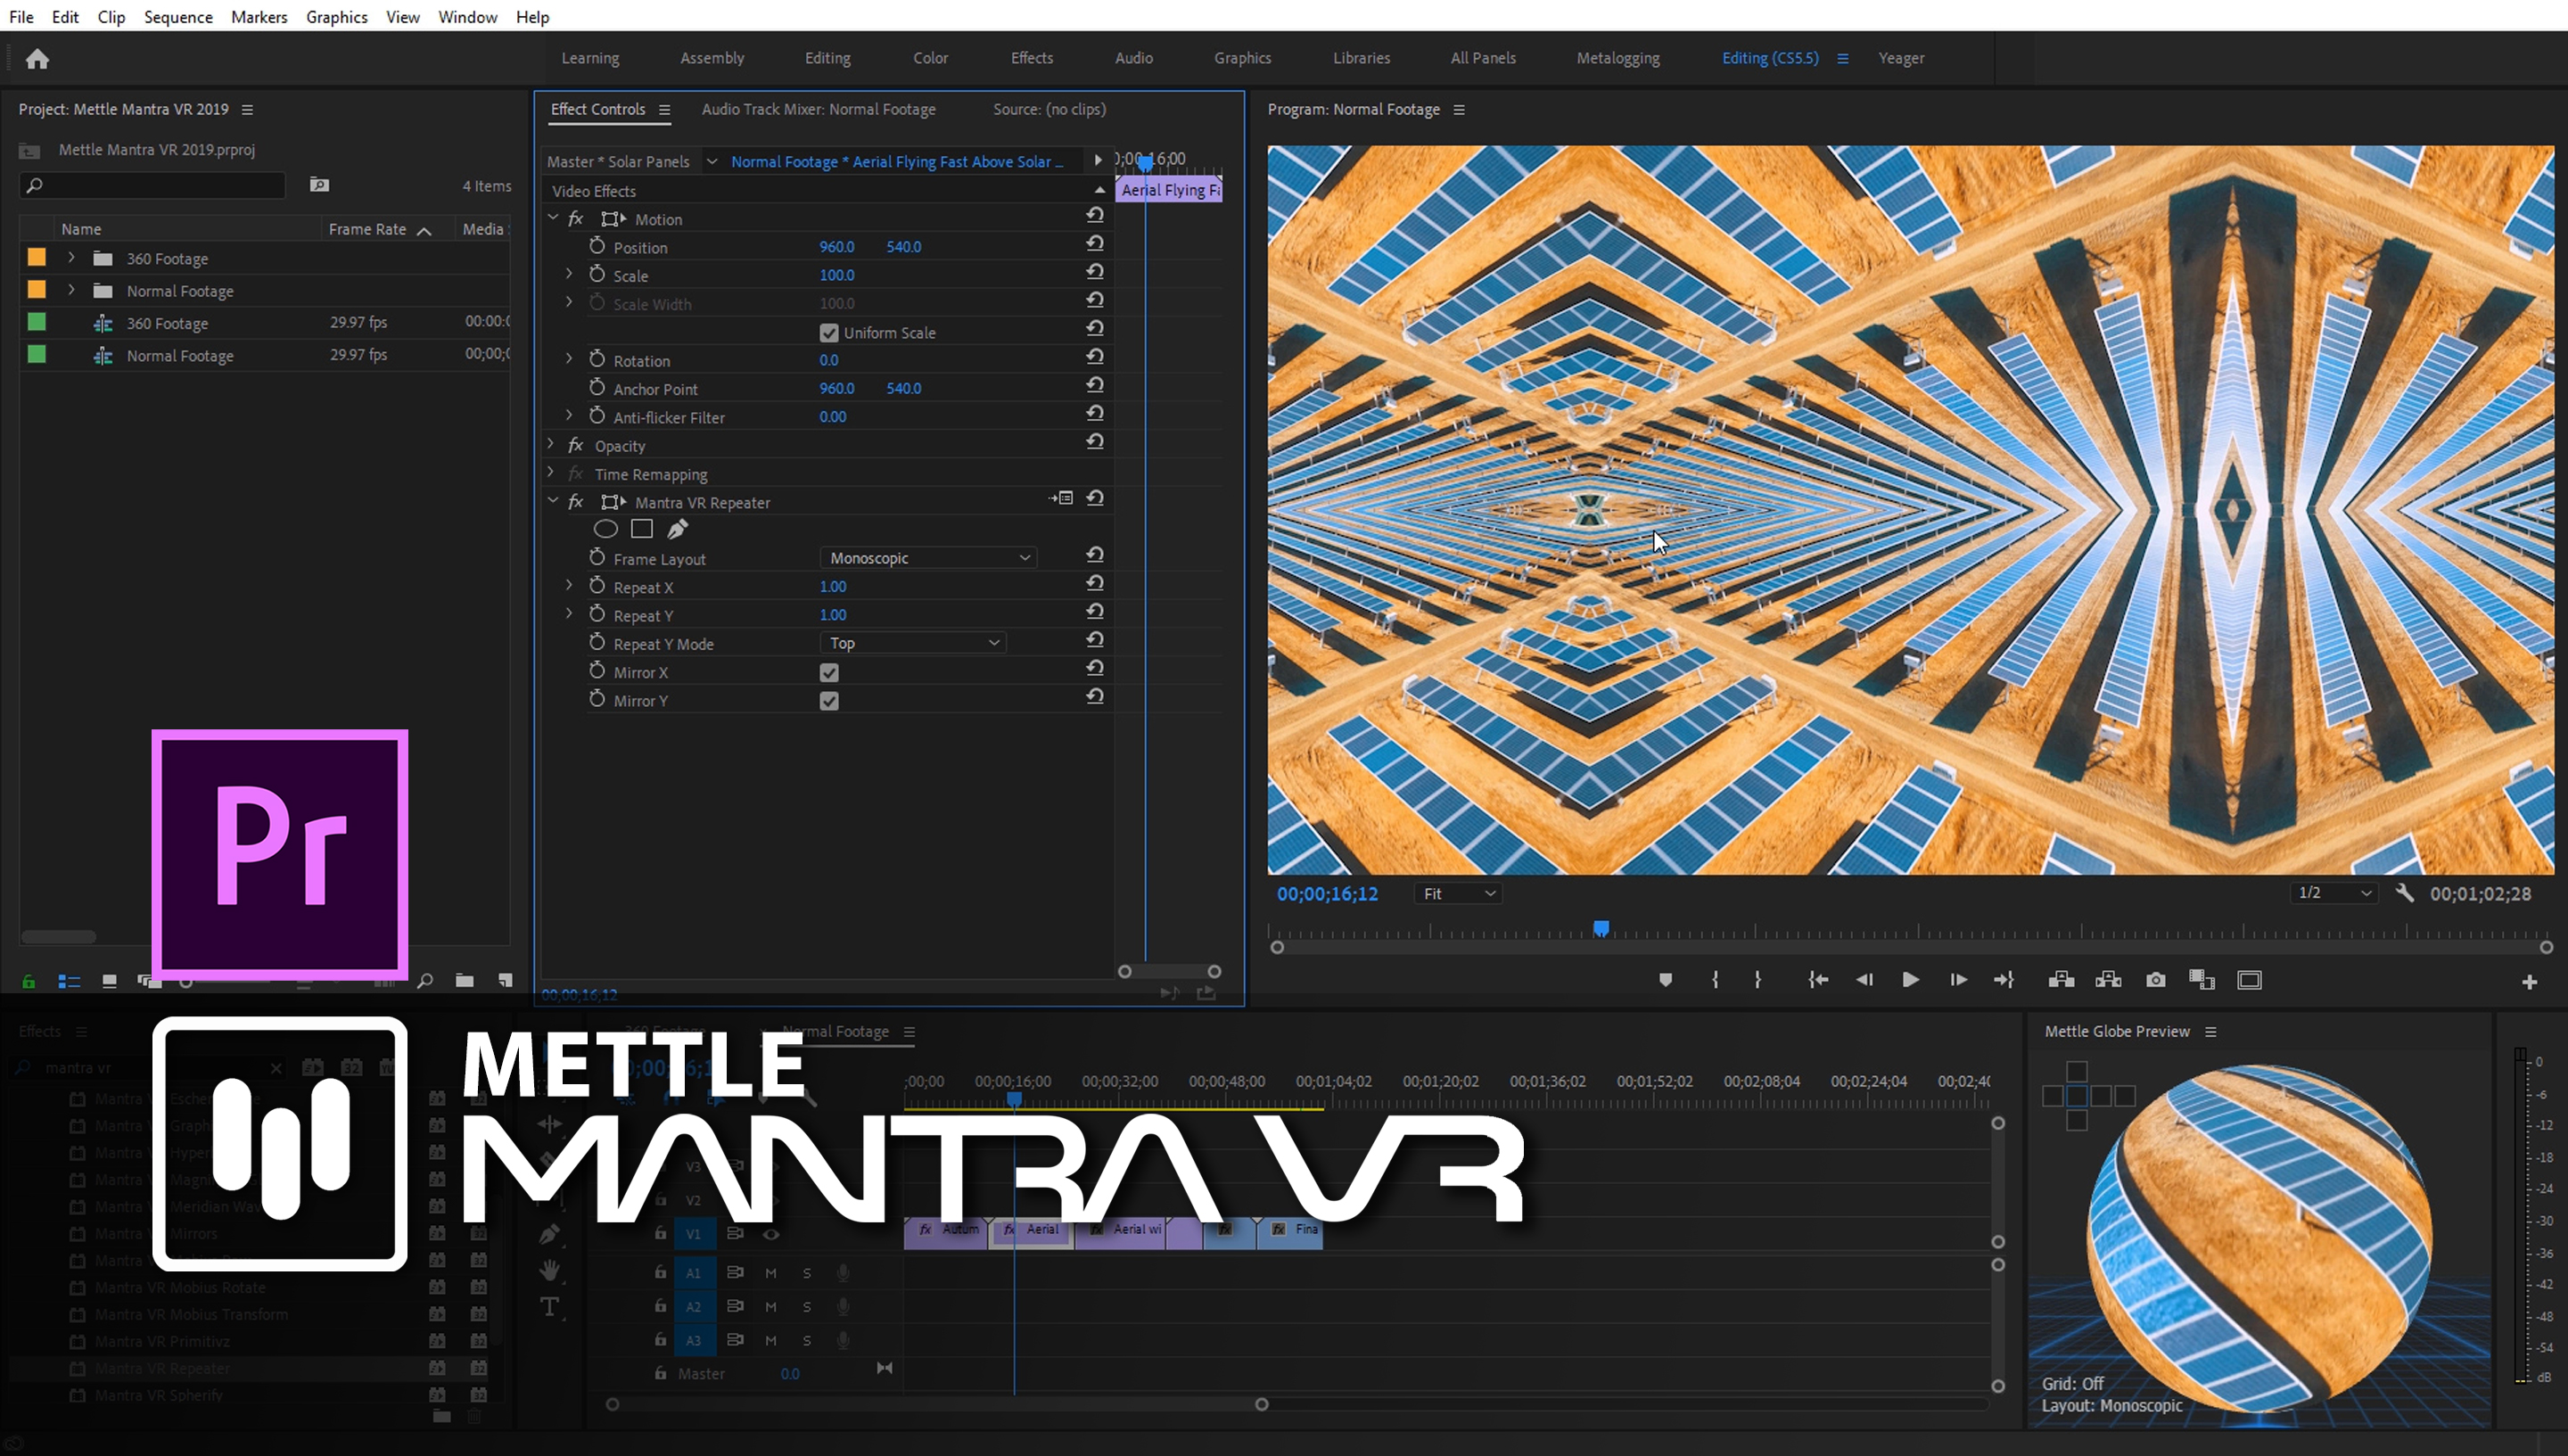 Mantra Vr Premiere Pro Overview V1 27 Mettle